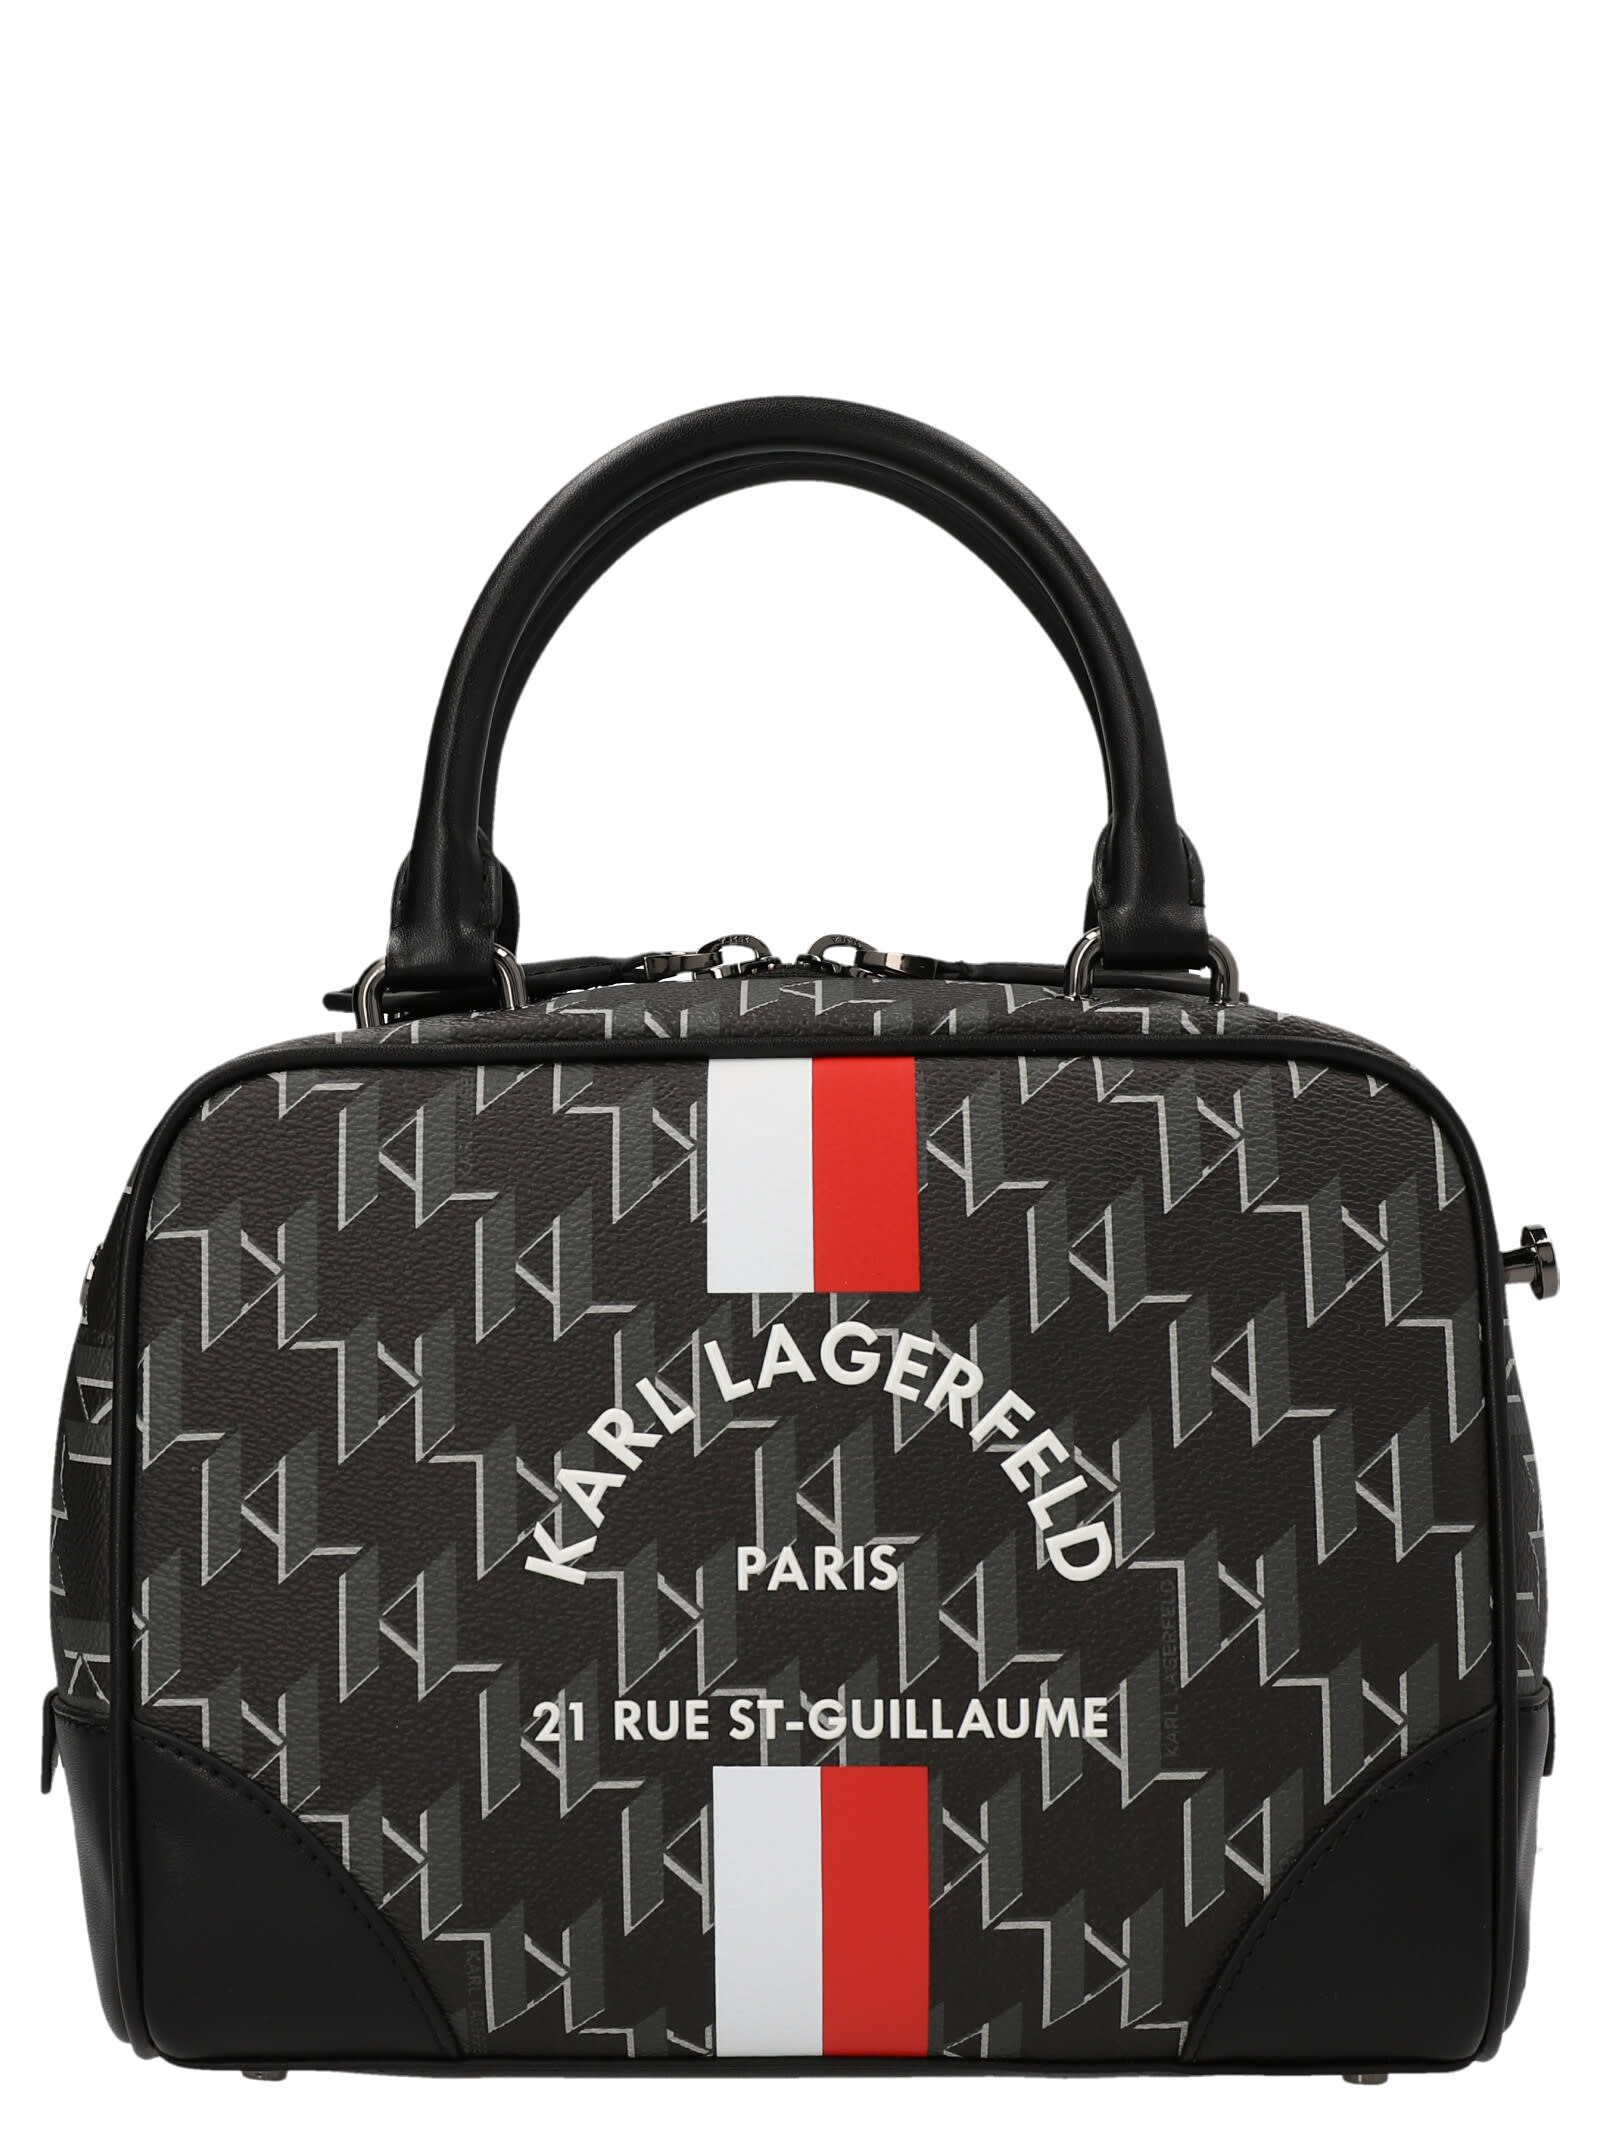 Karl Lagerfeld rue St-guillame Monogram Bowling Handbag